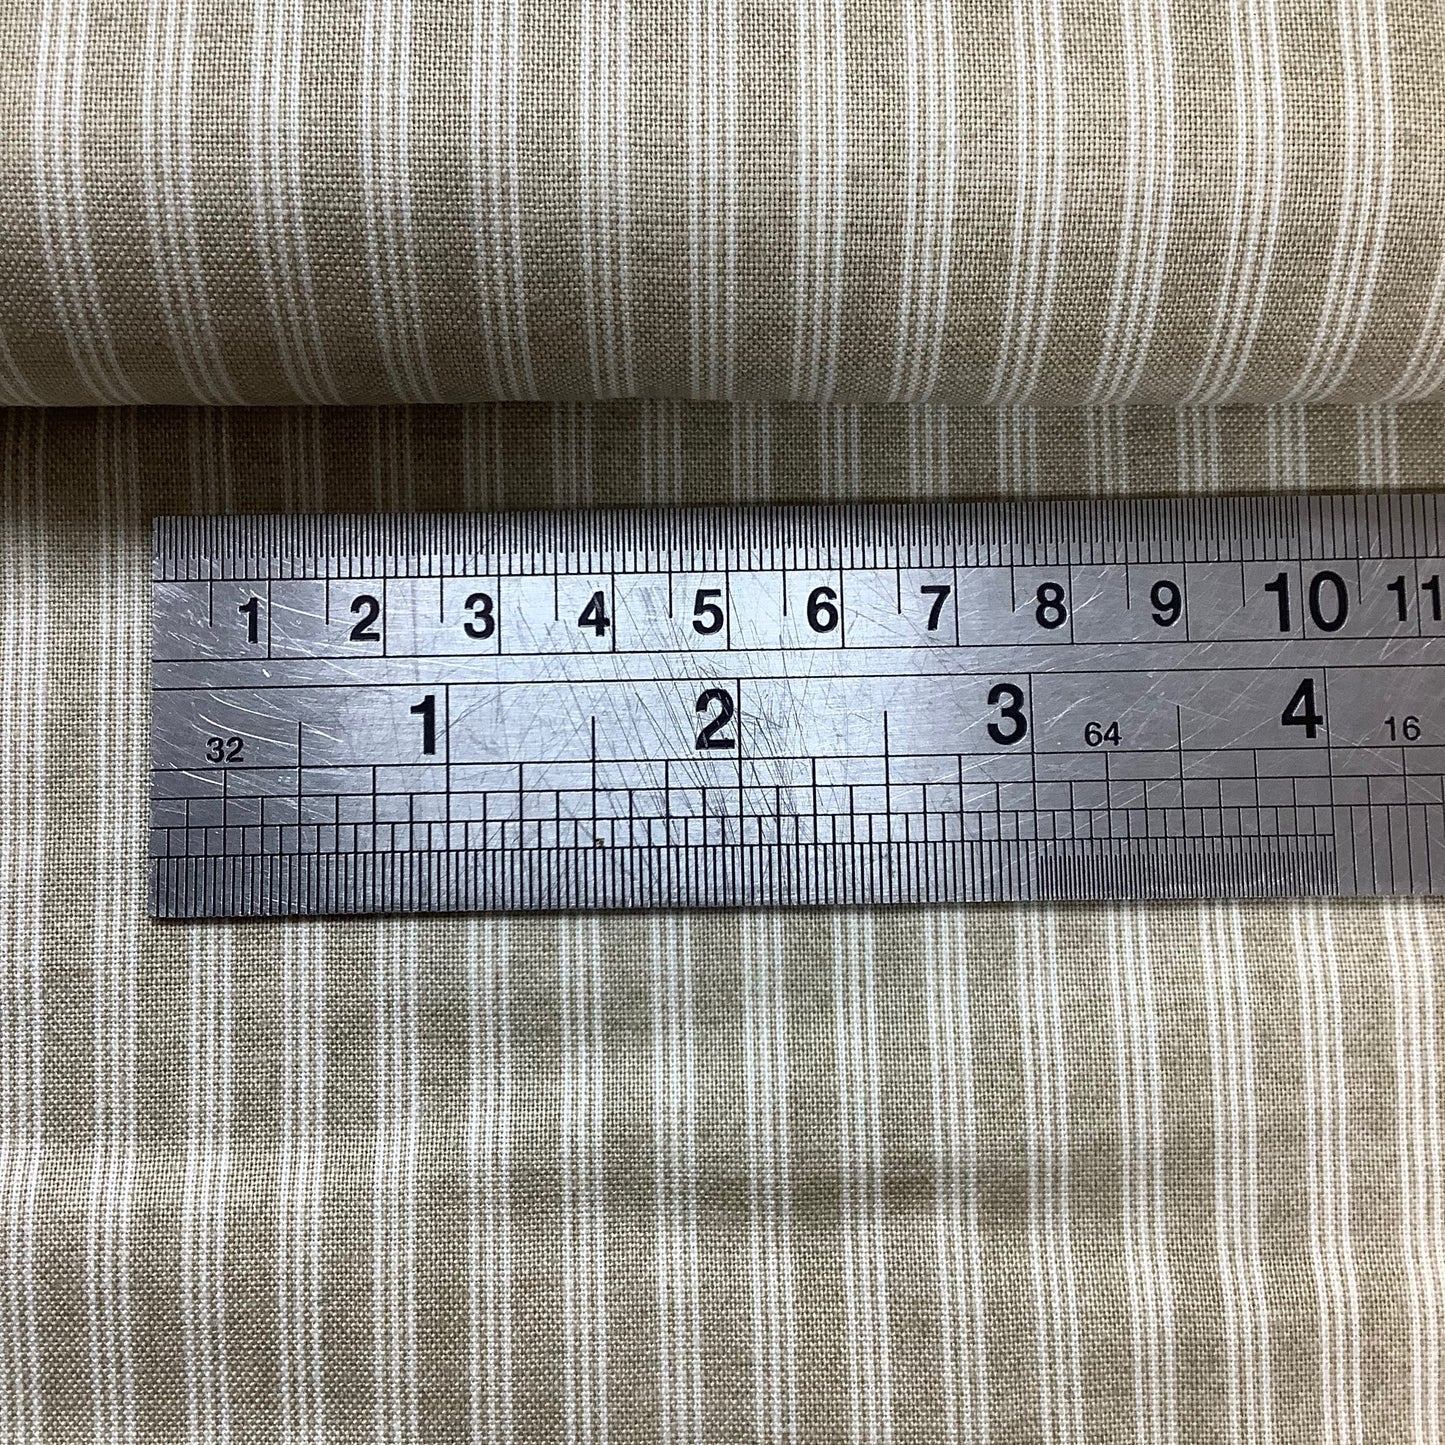 Makower Triple Stripe Brown Red 100% Premium Cotton Fabric 1780